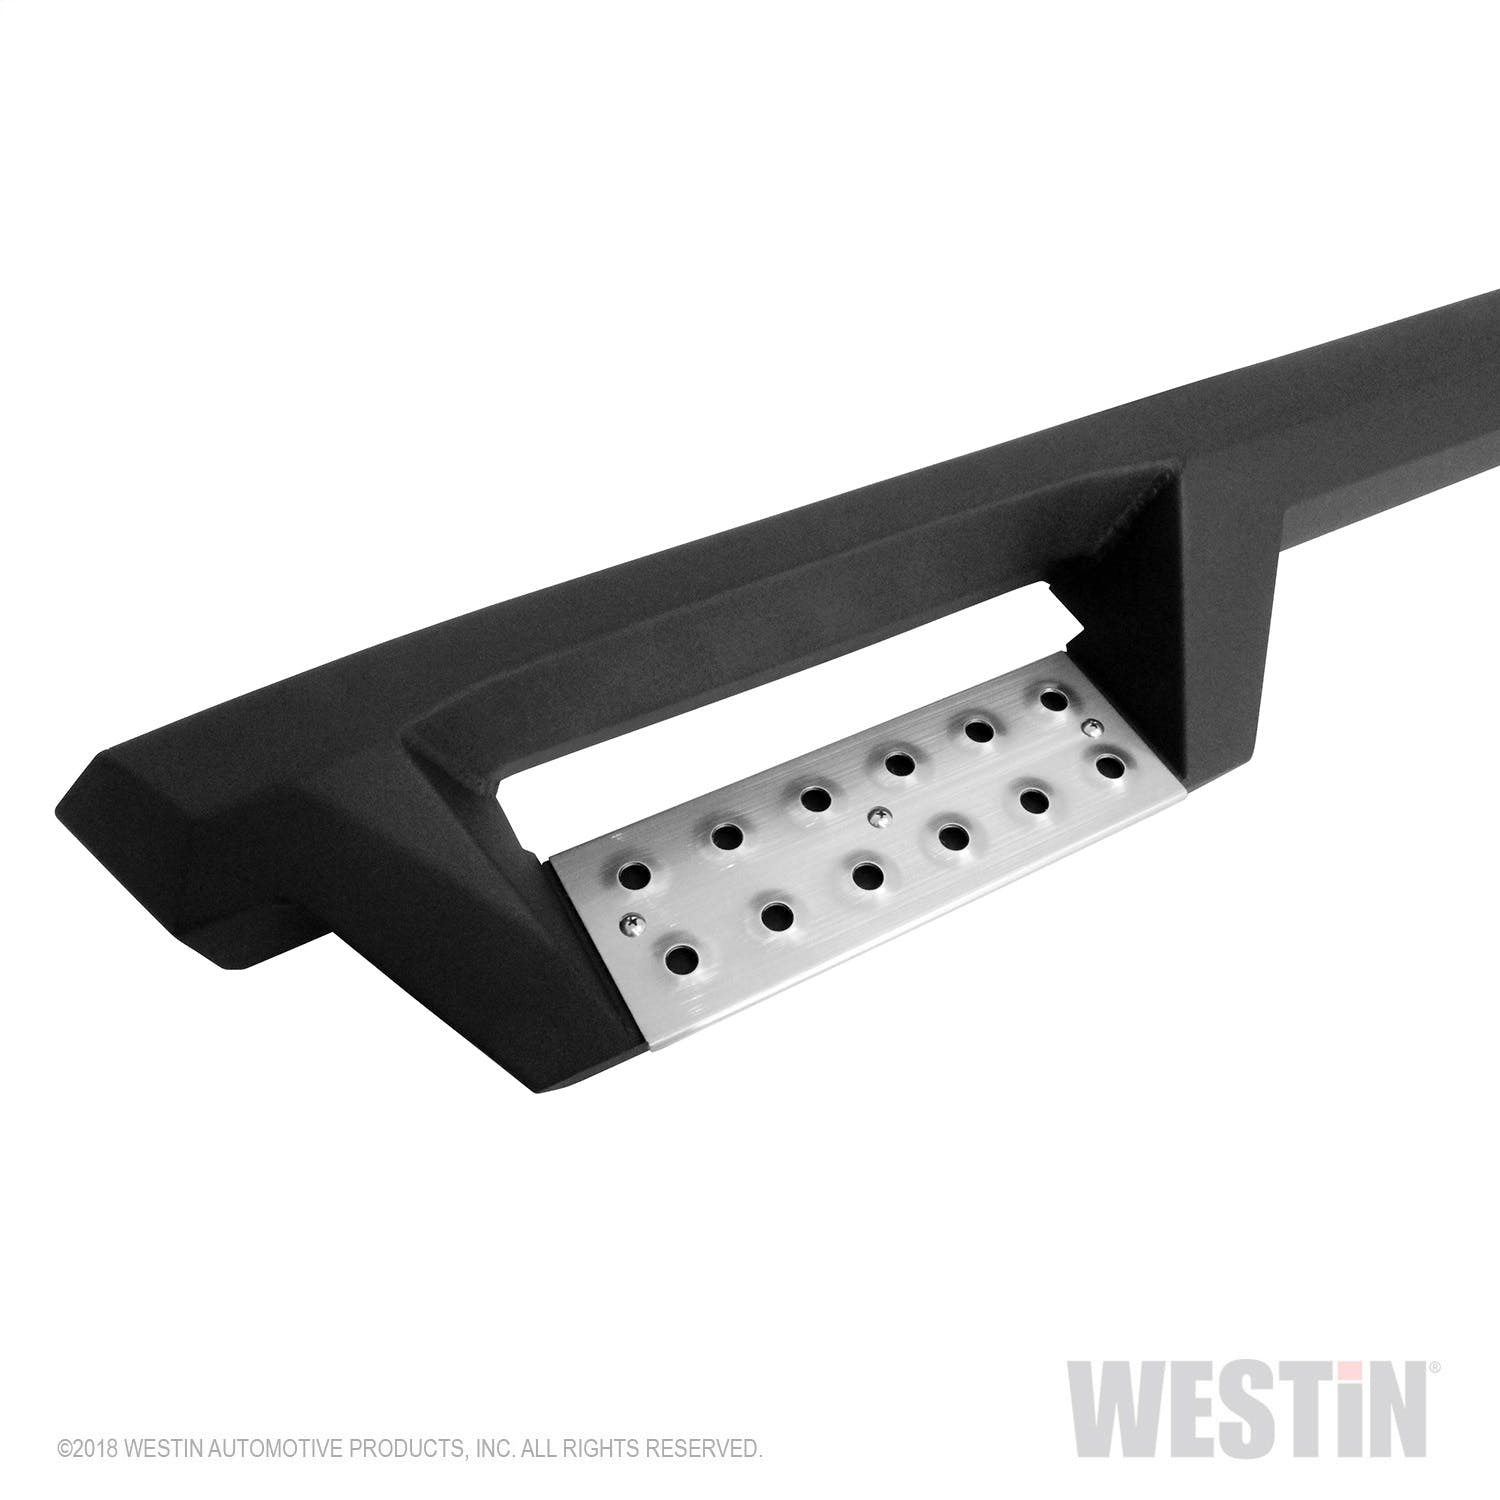 Westin Automotive 56-5347152 HDX Stainless Drop Wheel-to-Wheel Nerf Step Bars Textured Black